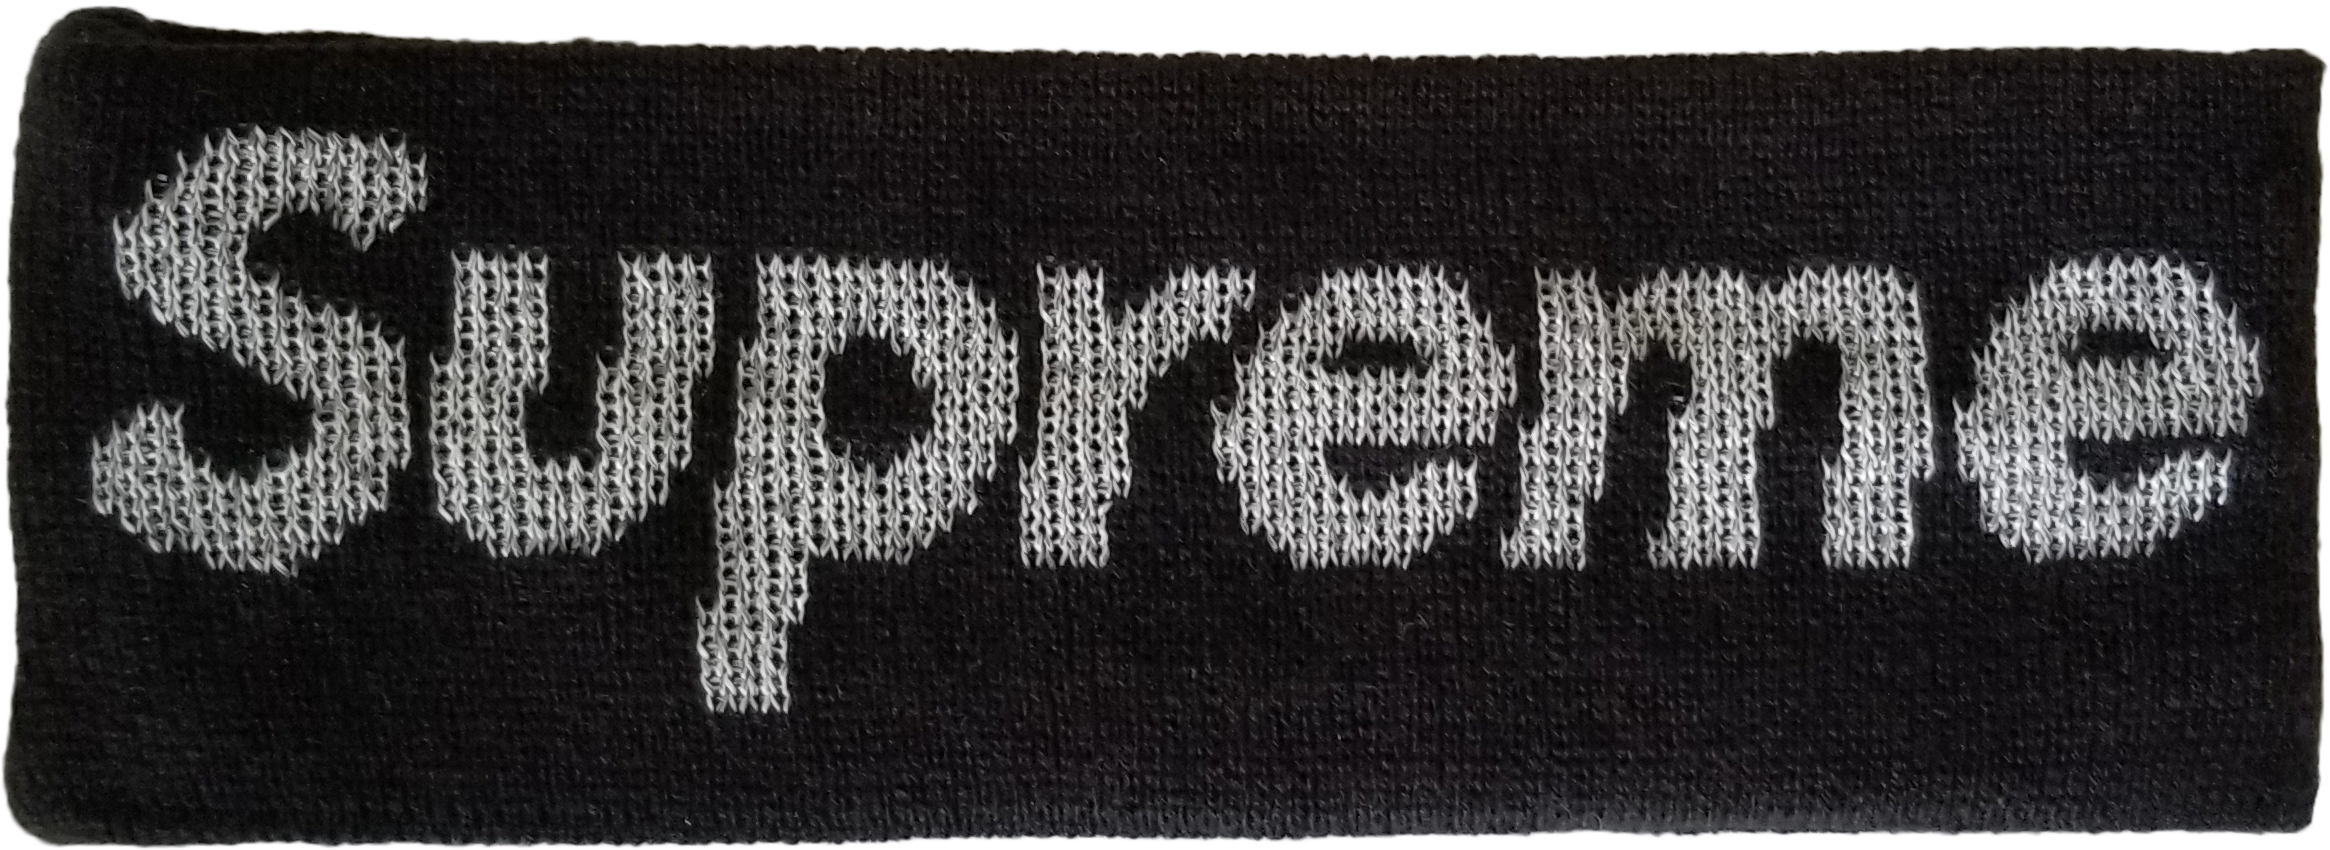 Supreme New Era Reflective Logo Headband (FW 16) Black - FW16